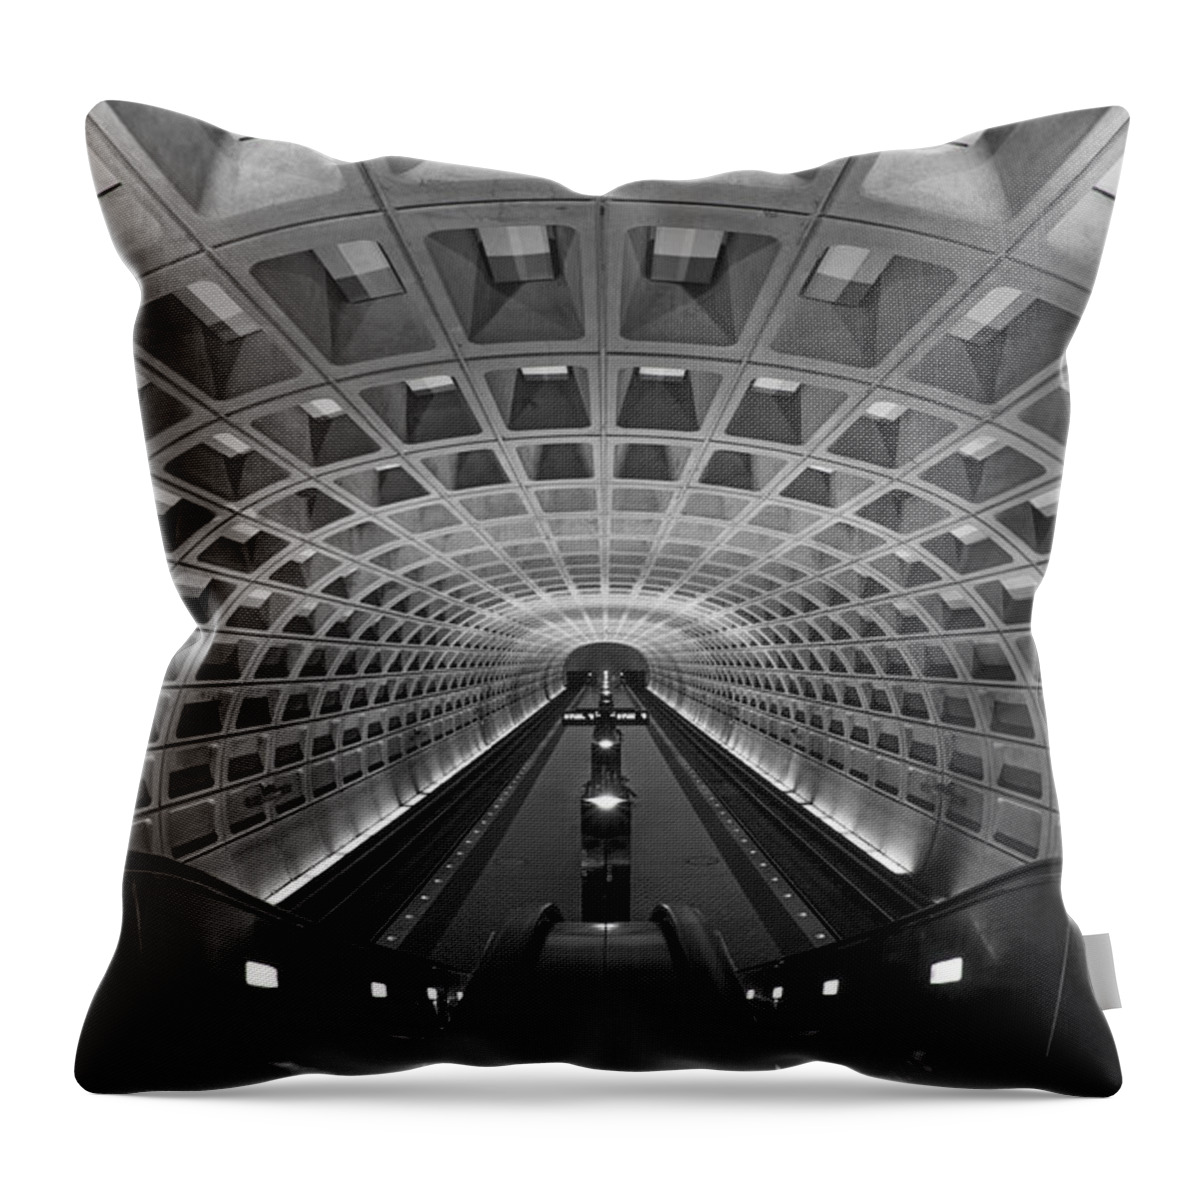 Washington Dc Throw Pillow featuring the photograph D.C. Subway by Dustin LeFevre